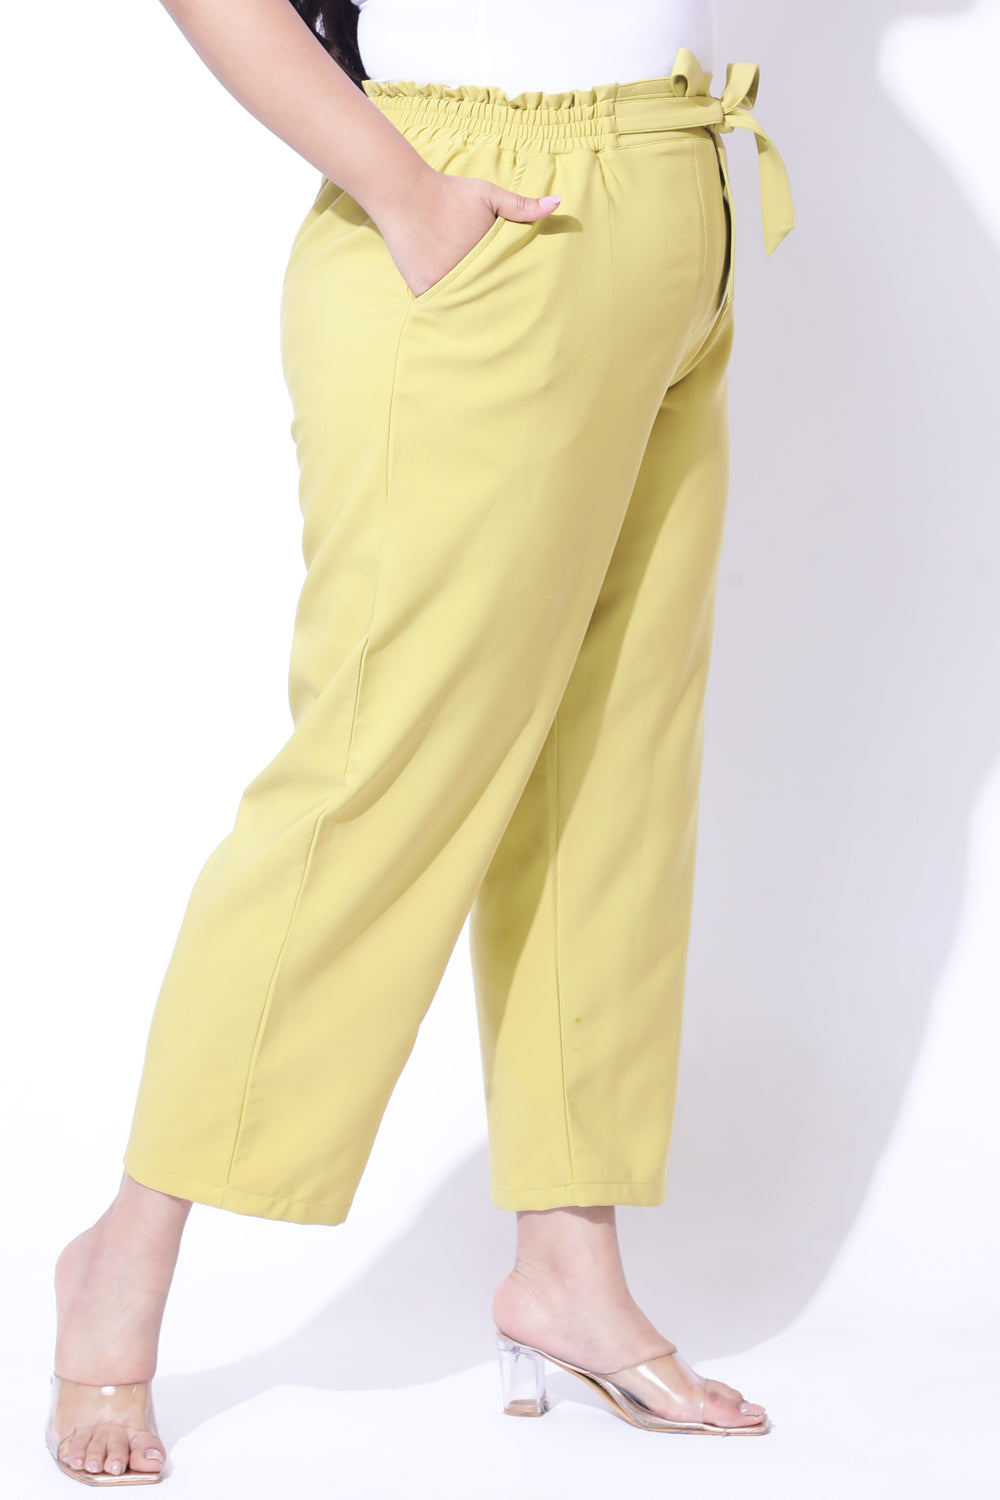 Plus Size Yellow Pants for Women